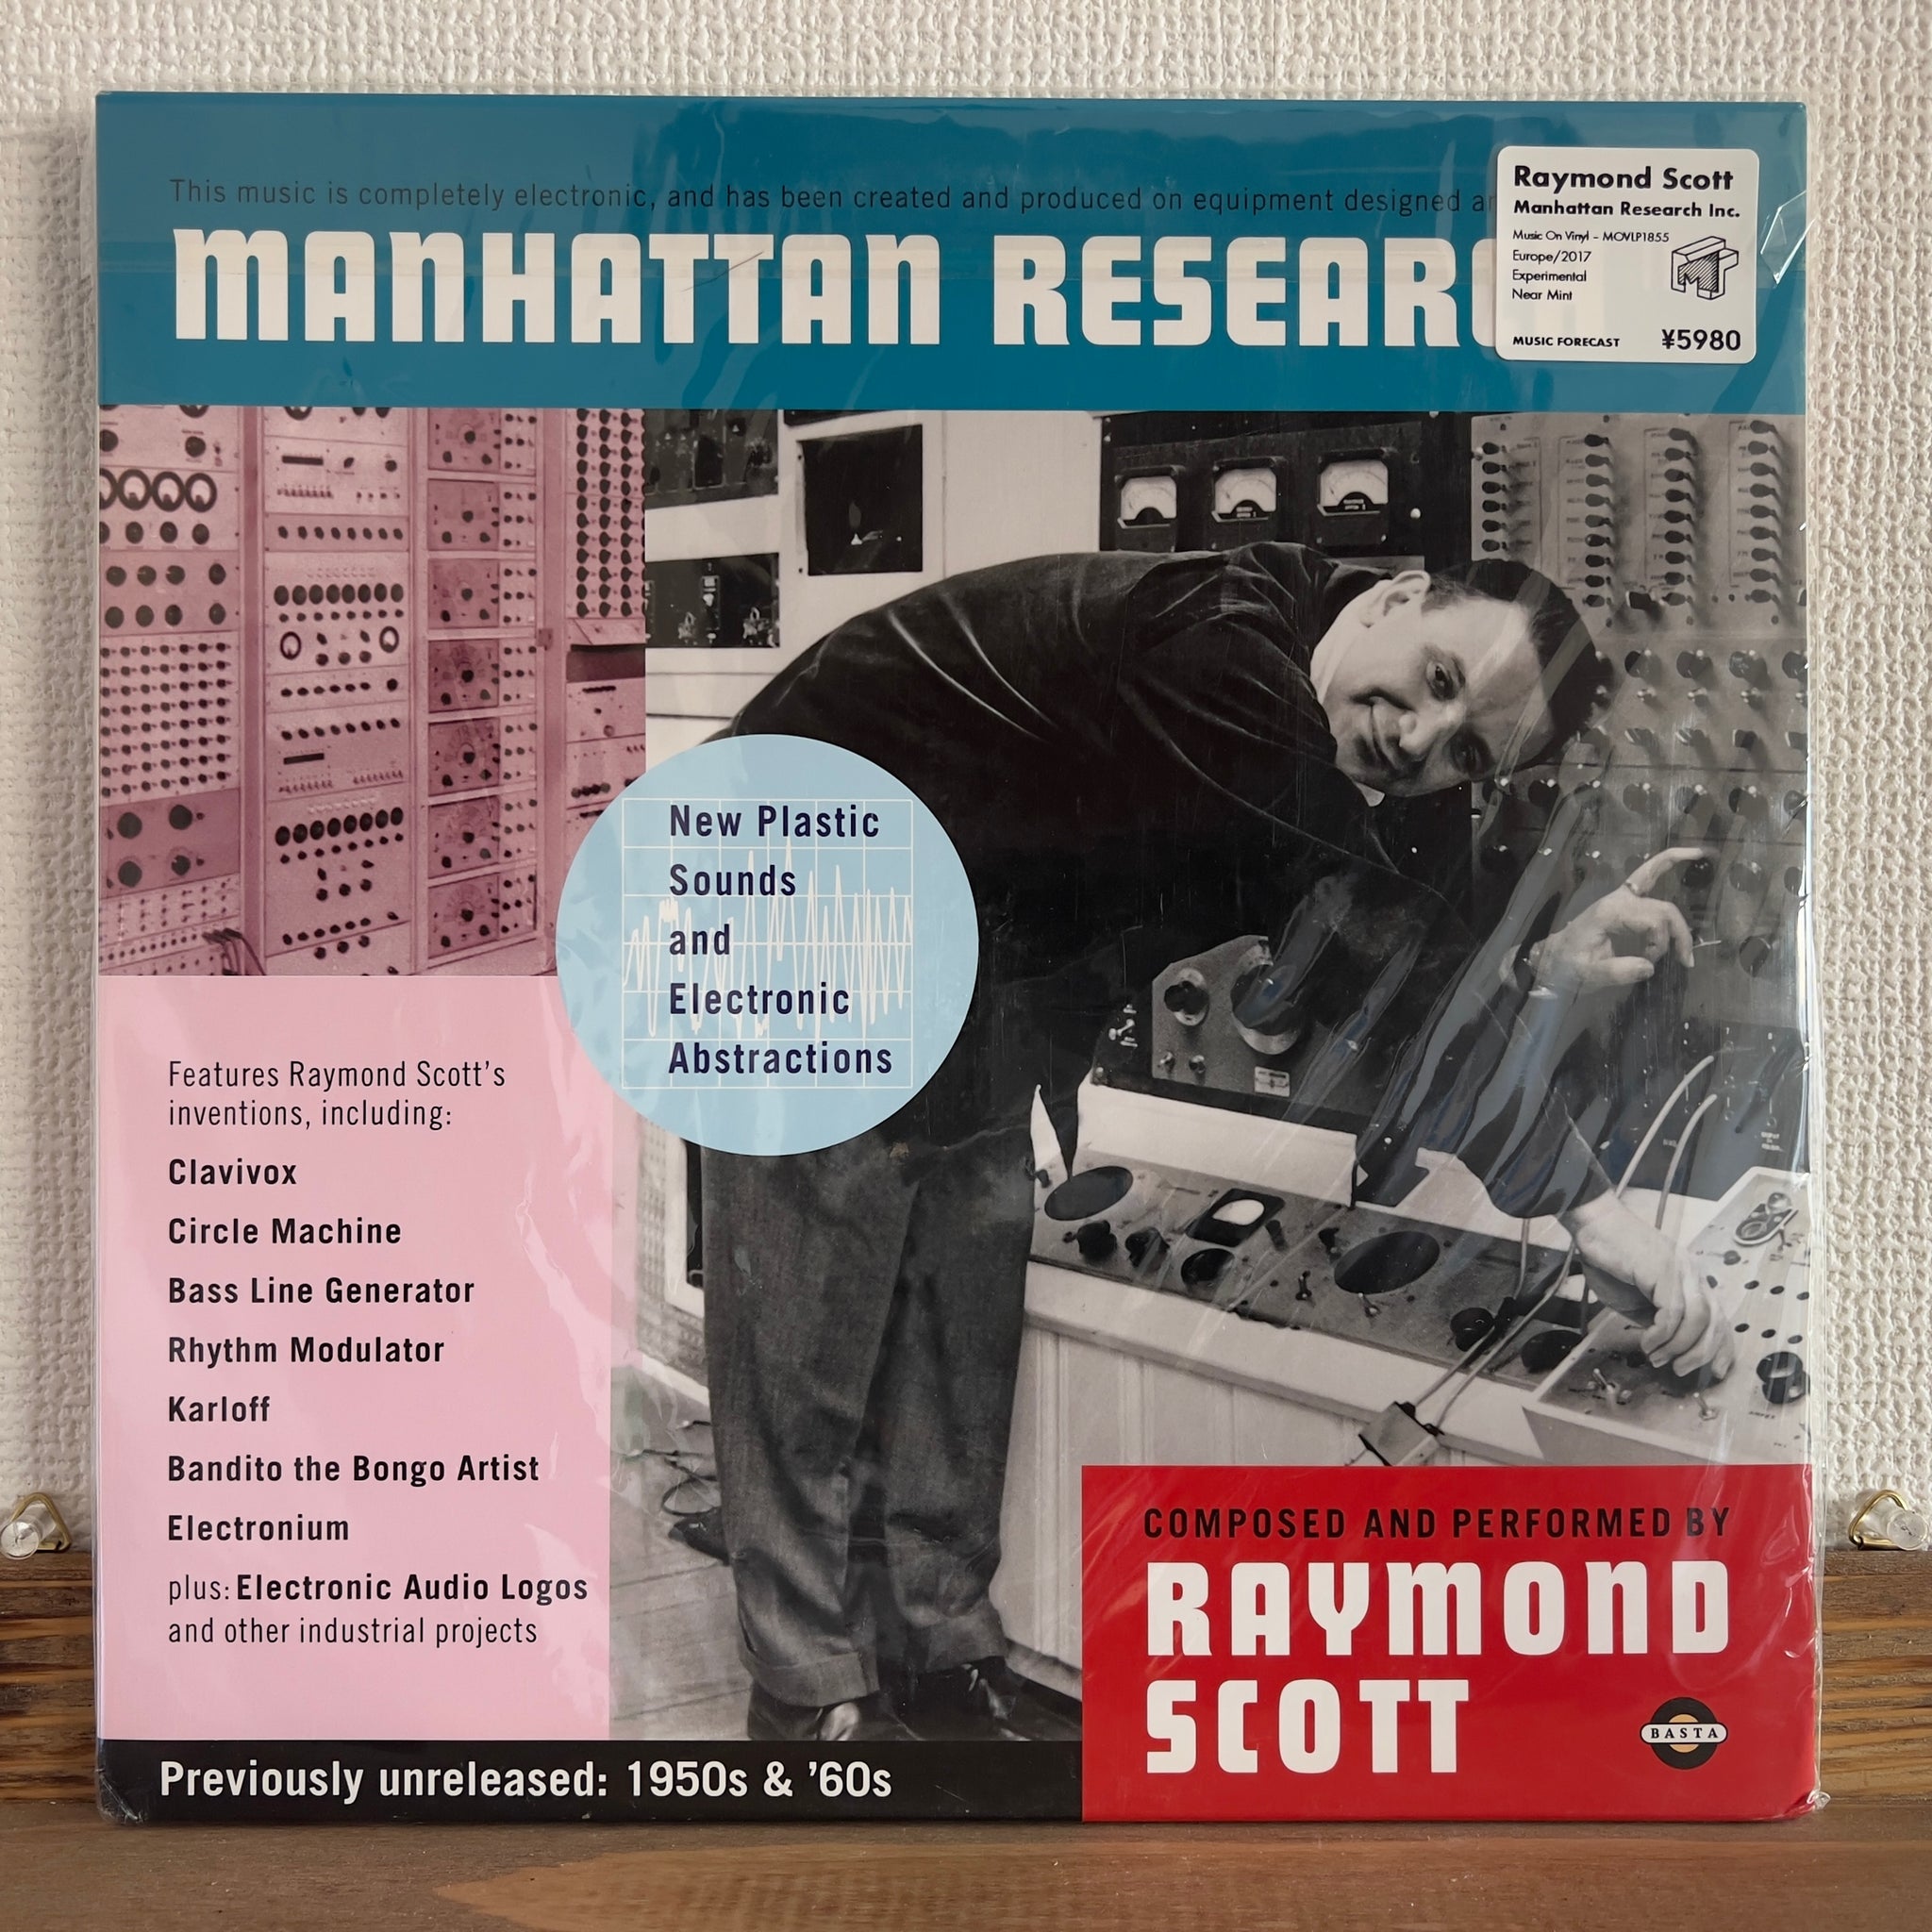 Raymond Scott - Manhattan Research Inc.